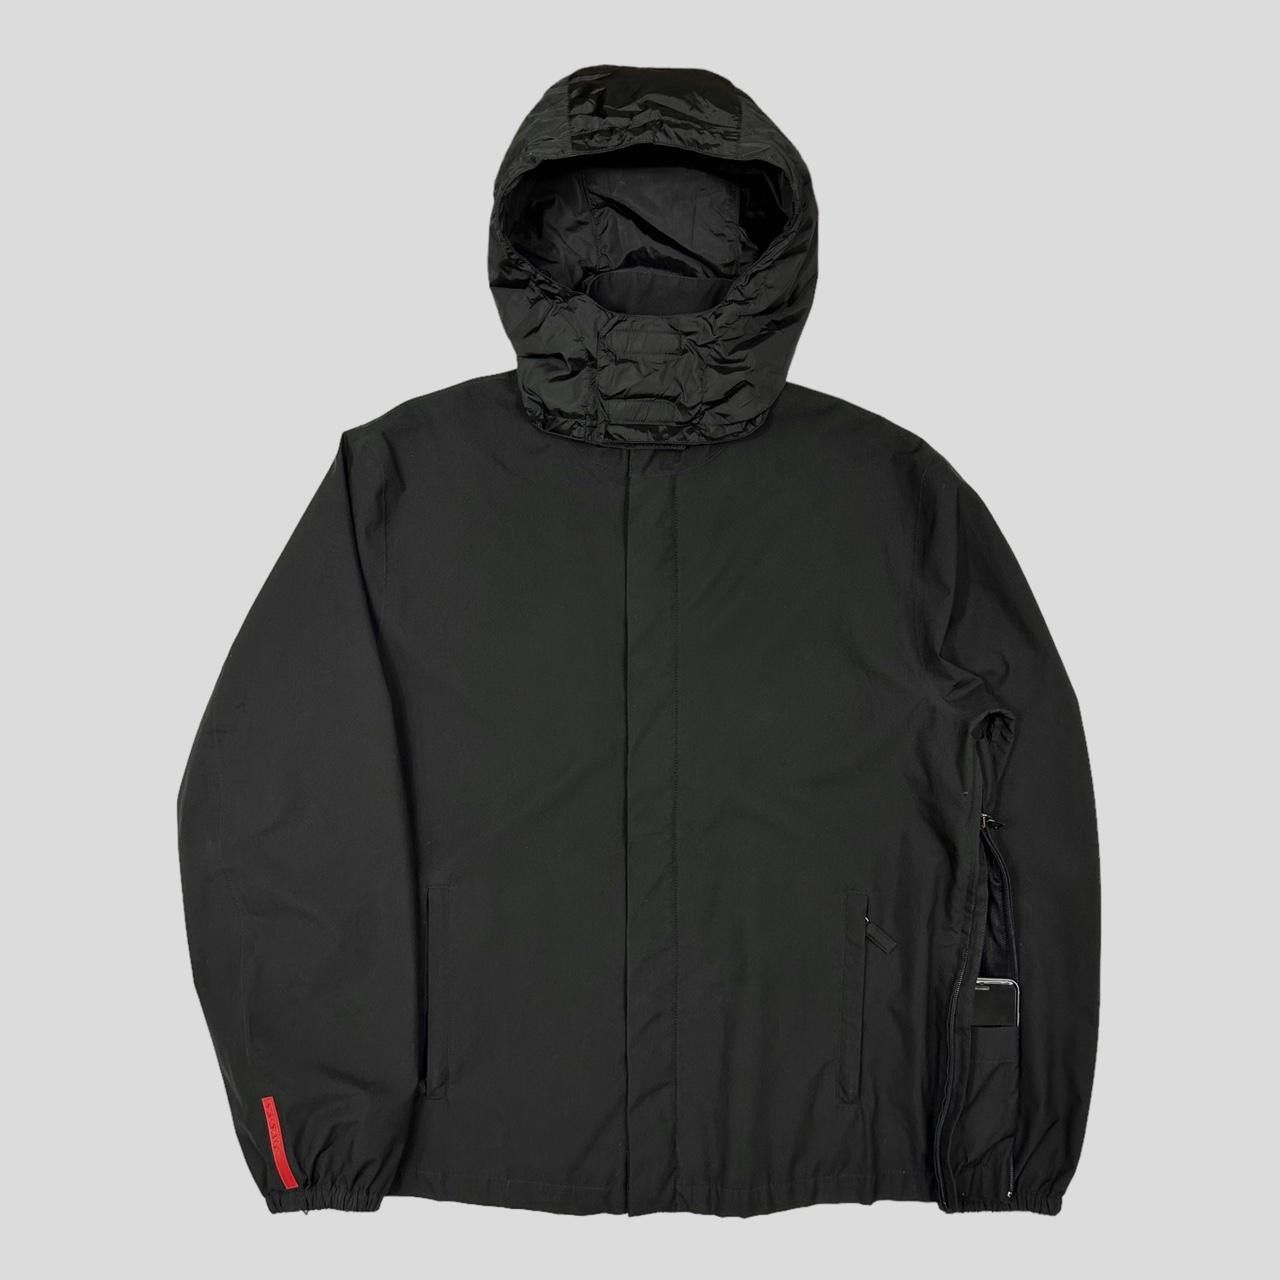 Prada Men's Re-Nylon Wind-Resistant Jacket